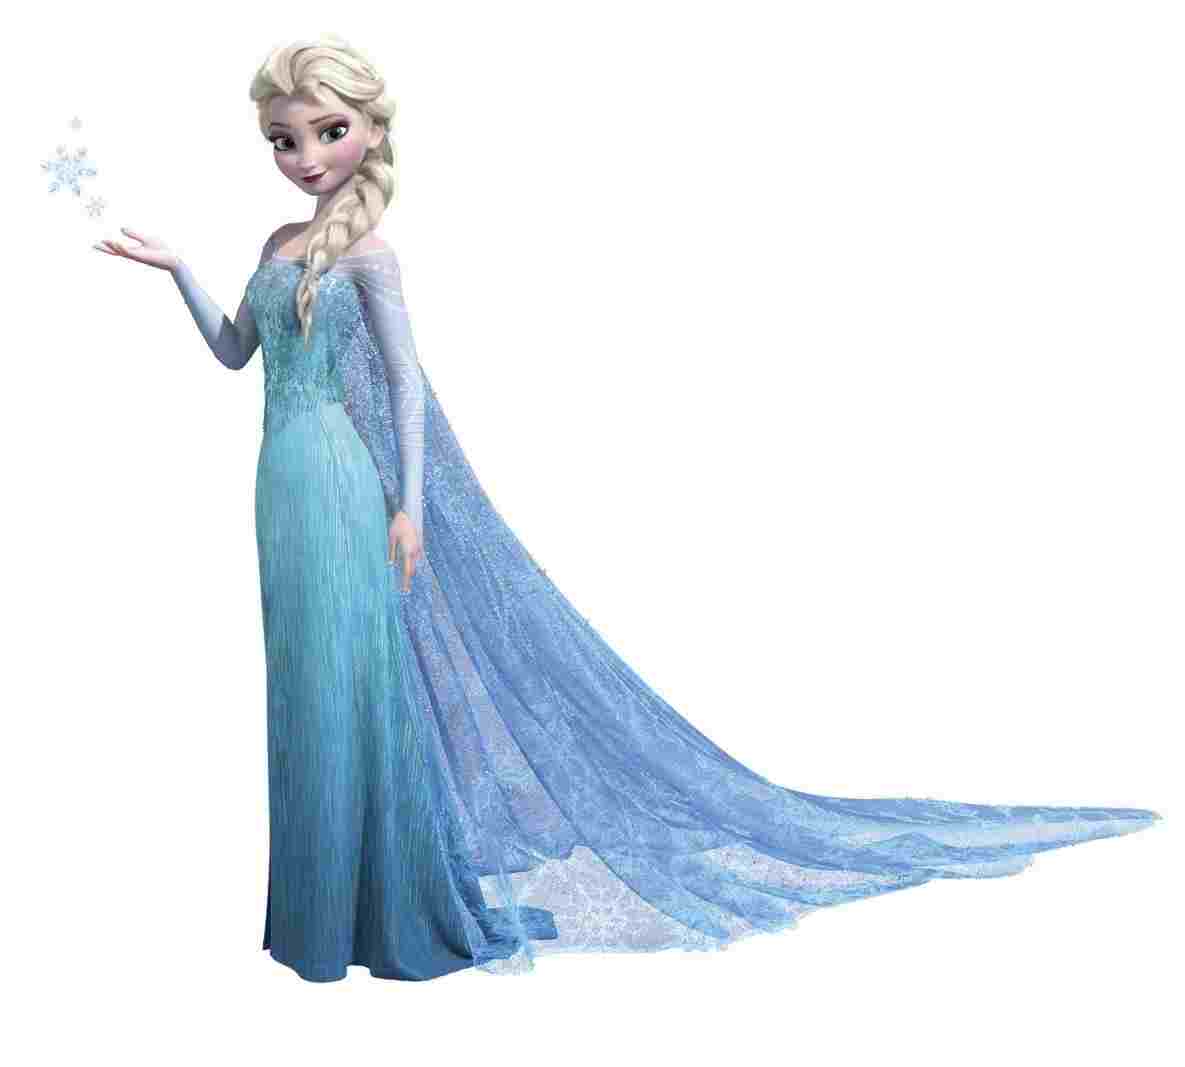 Elsa Frozen Drawing Full Body at Explore